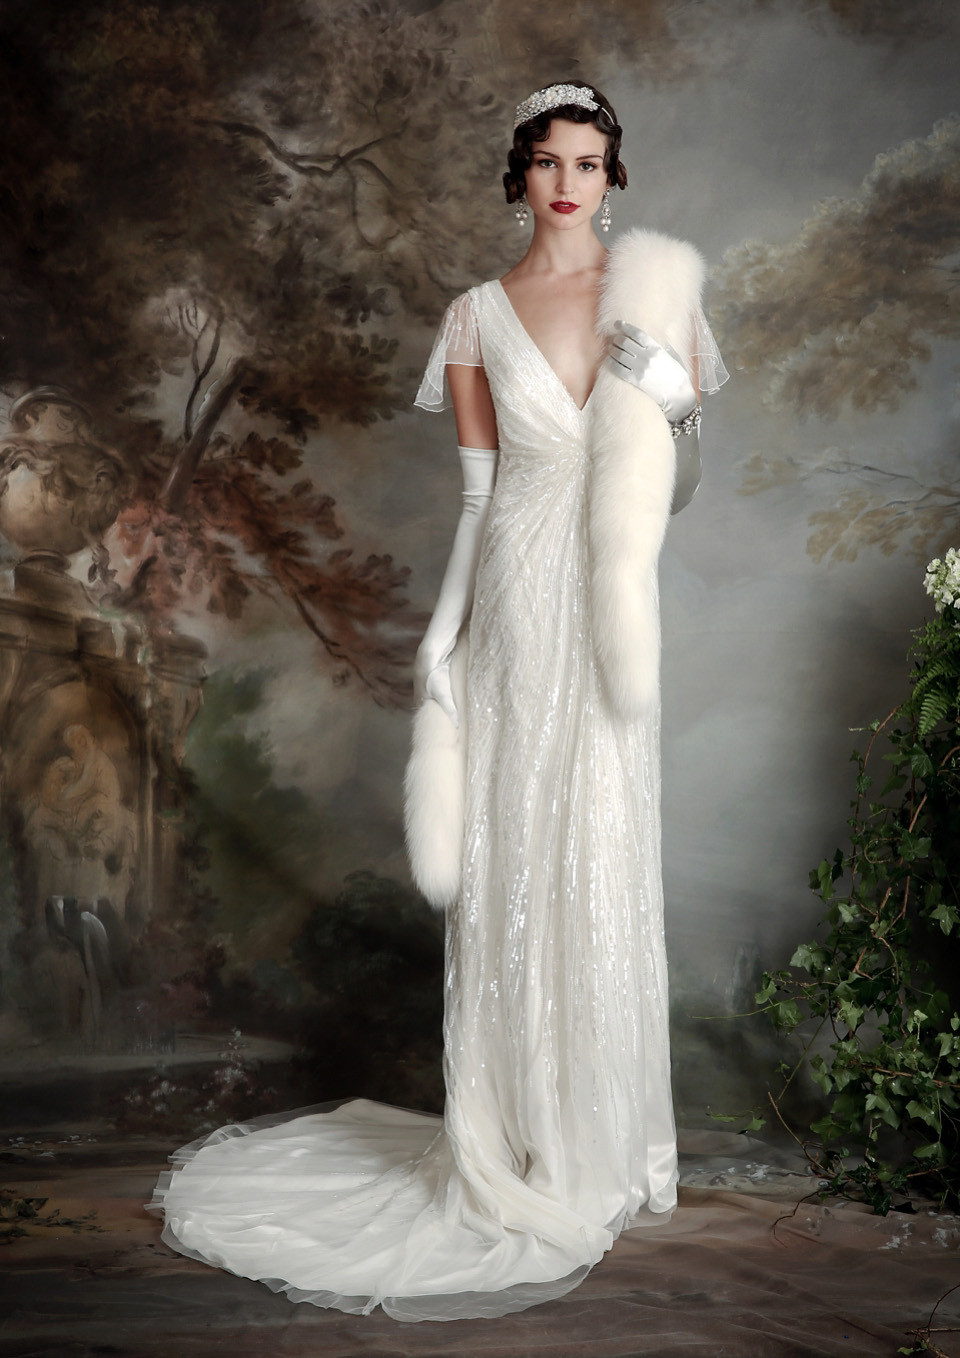 Art Deco Wedding Dress
 Eliza Jane Howell Elegant Art Deco Inspired Wedding